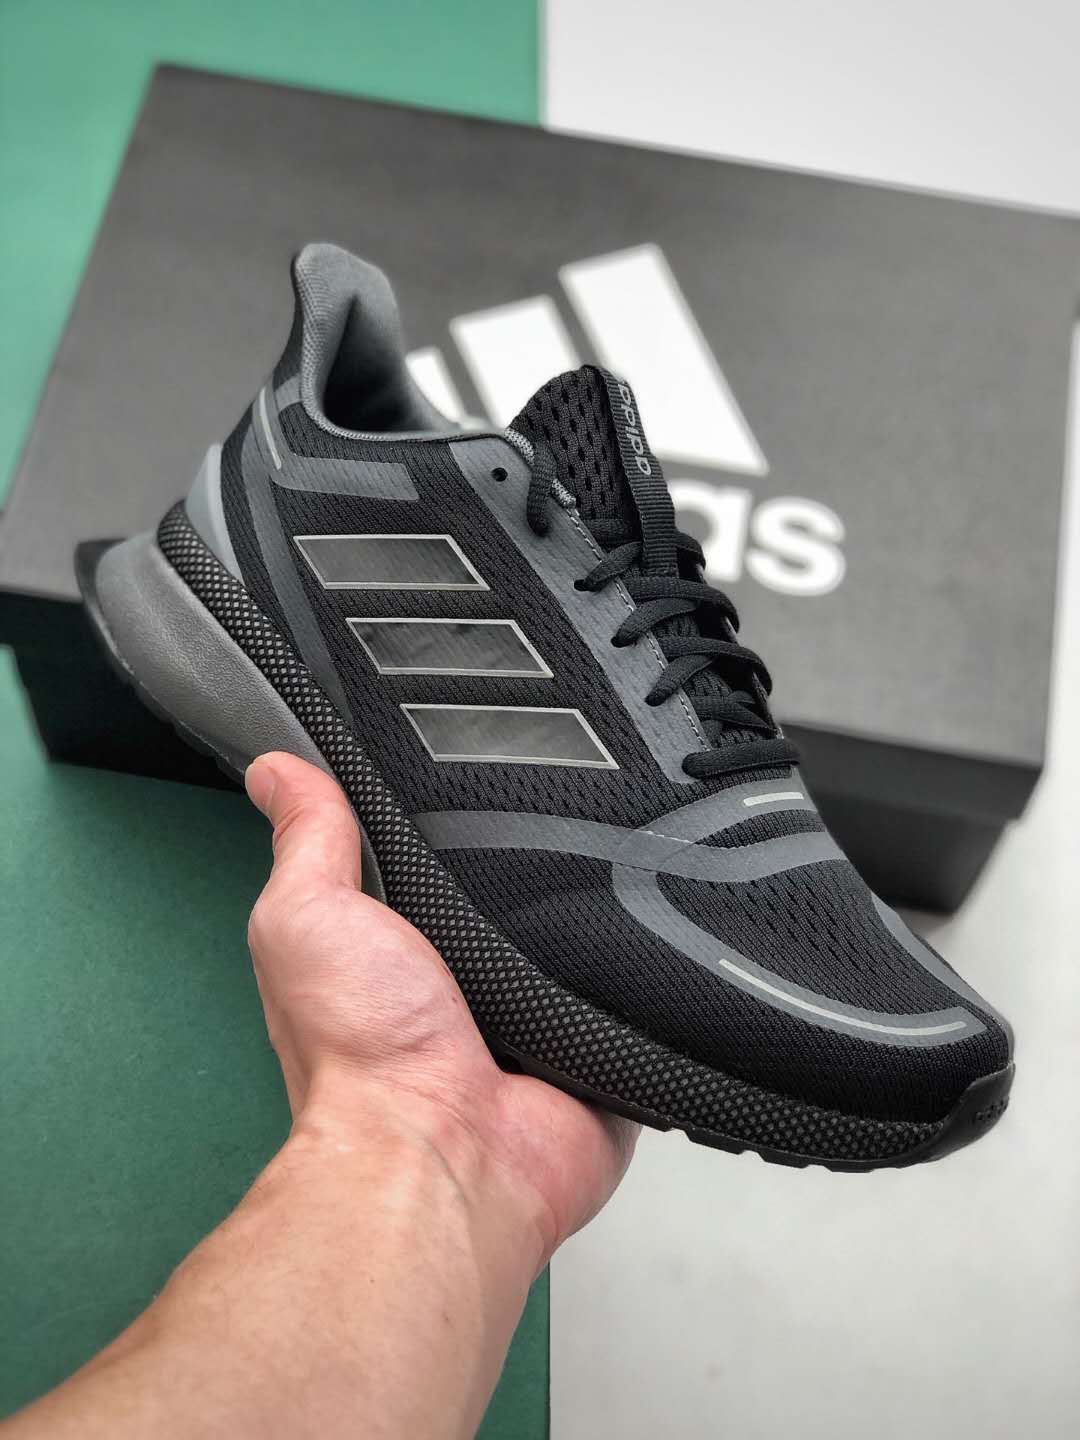 Adidas Nova Run Core Black Grey EE9267 | Shop the Latest Adidas Running Shoes